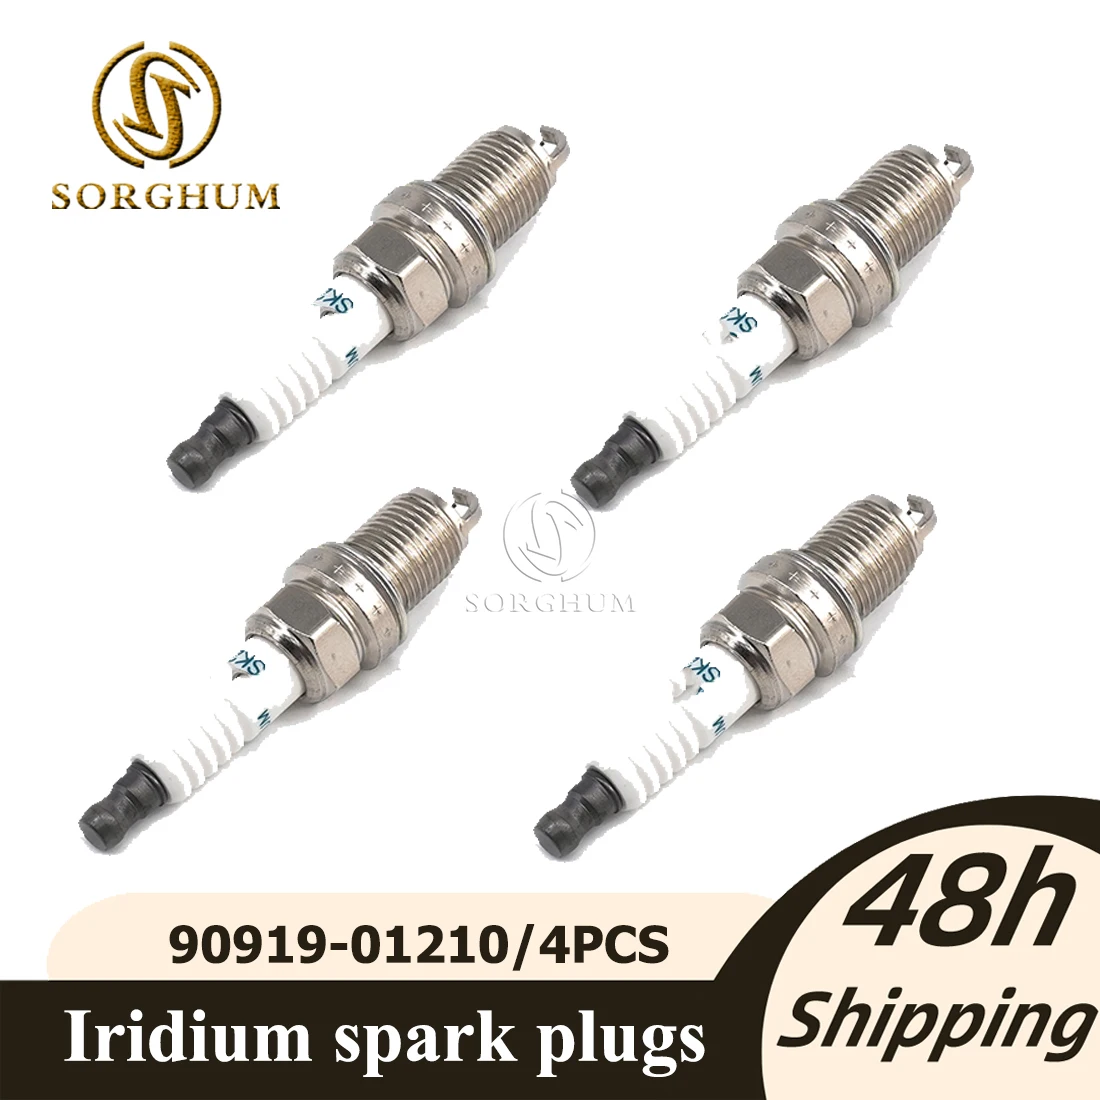 

Sorghum 4pcs/lot SK20R11 3297 90919-01210 Japan Iridium Spark Plugs For Toyota Scion Camry RAV4 Tundra Lexus 4.7L/V8 9091901210